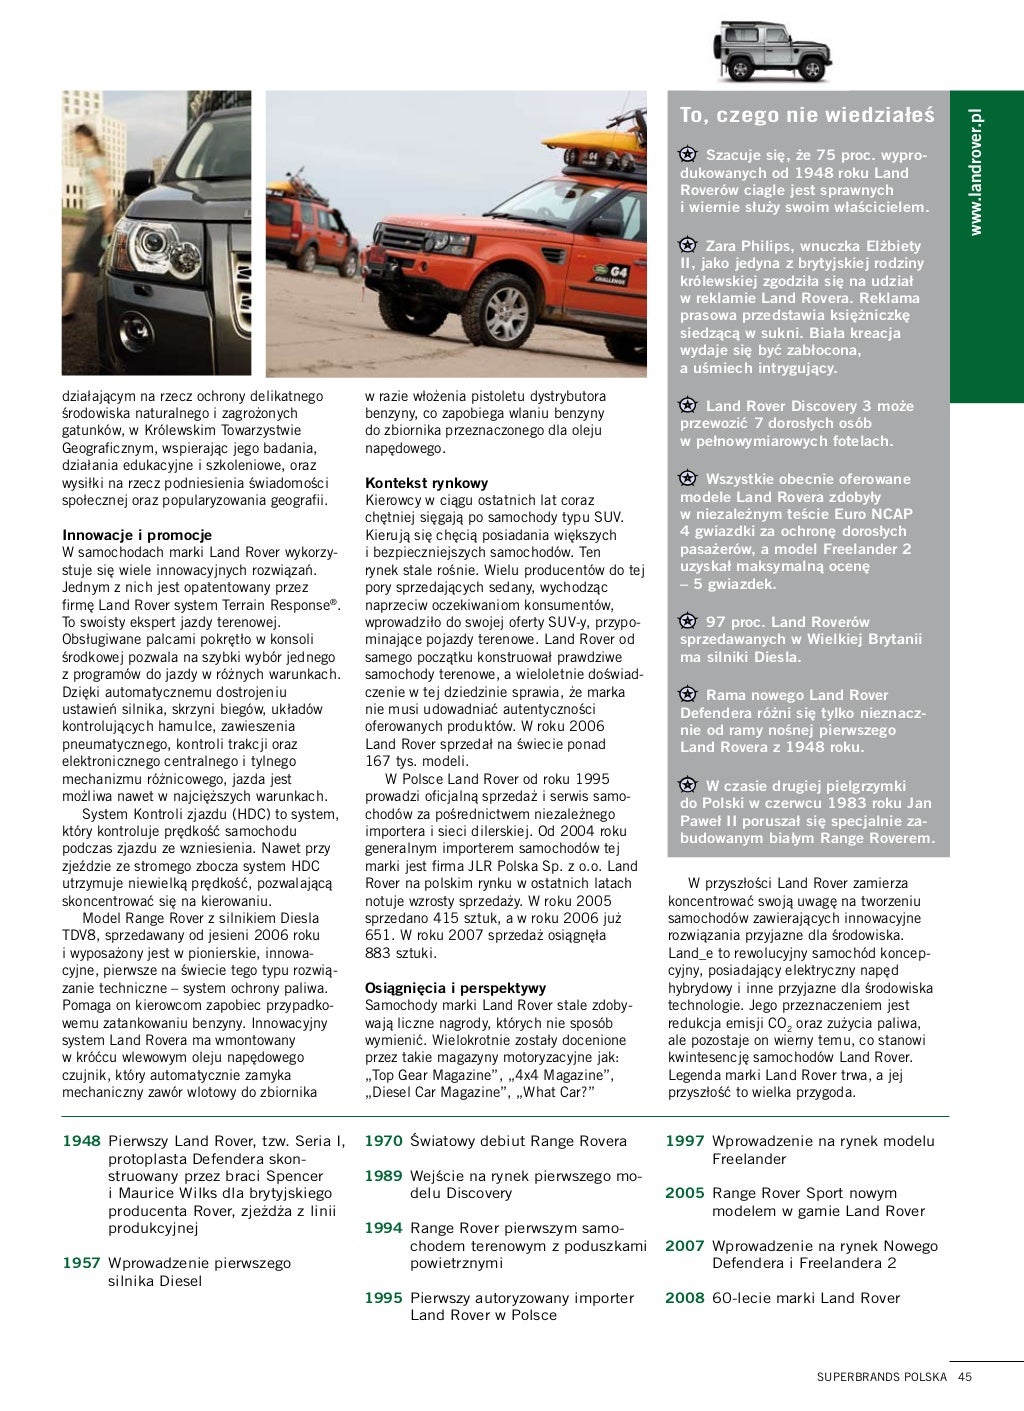 Case study marki Land Rover z Albumu Superbrands Polska 2008